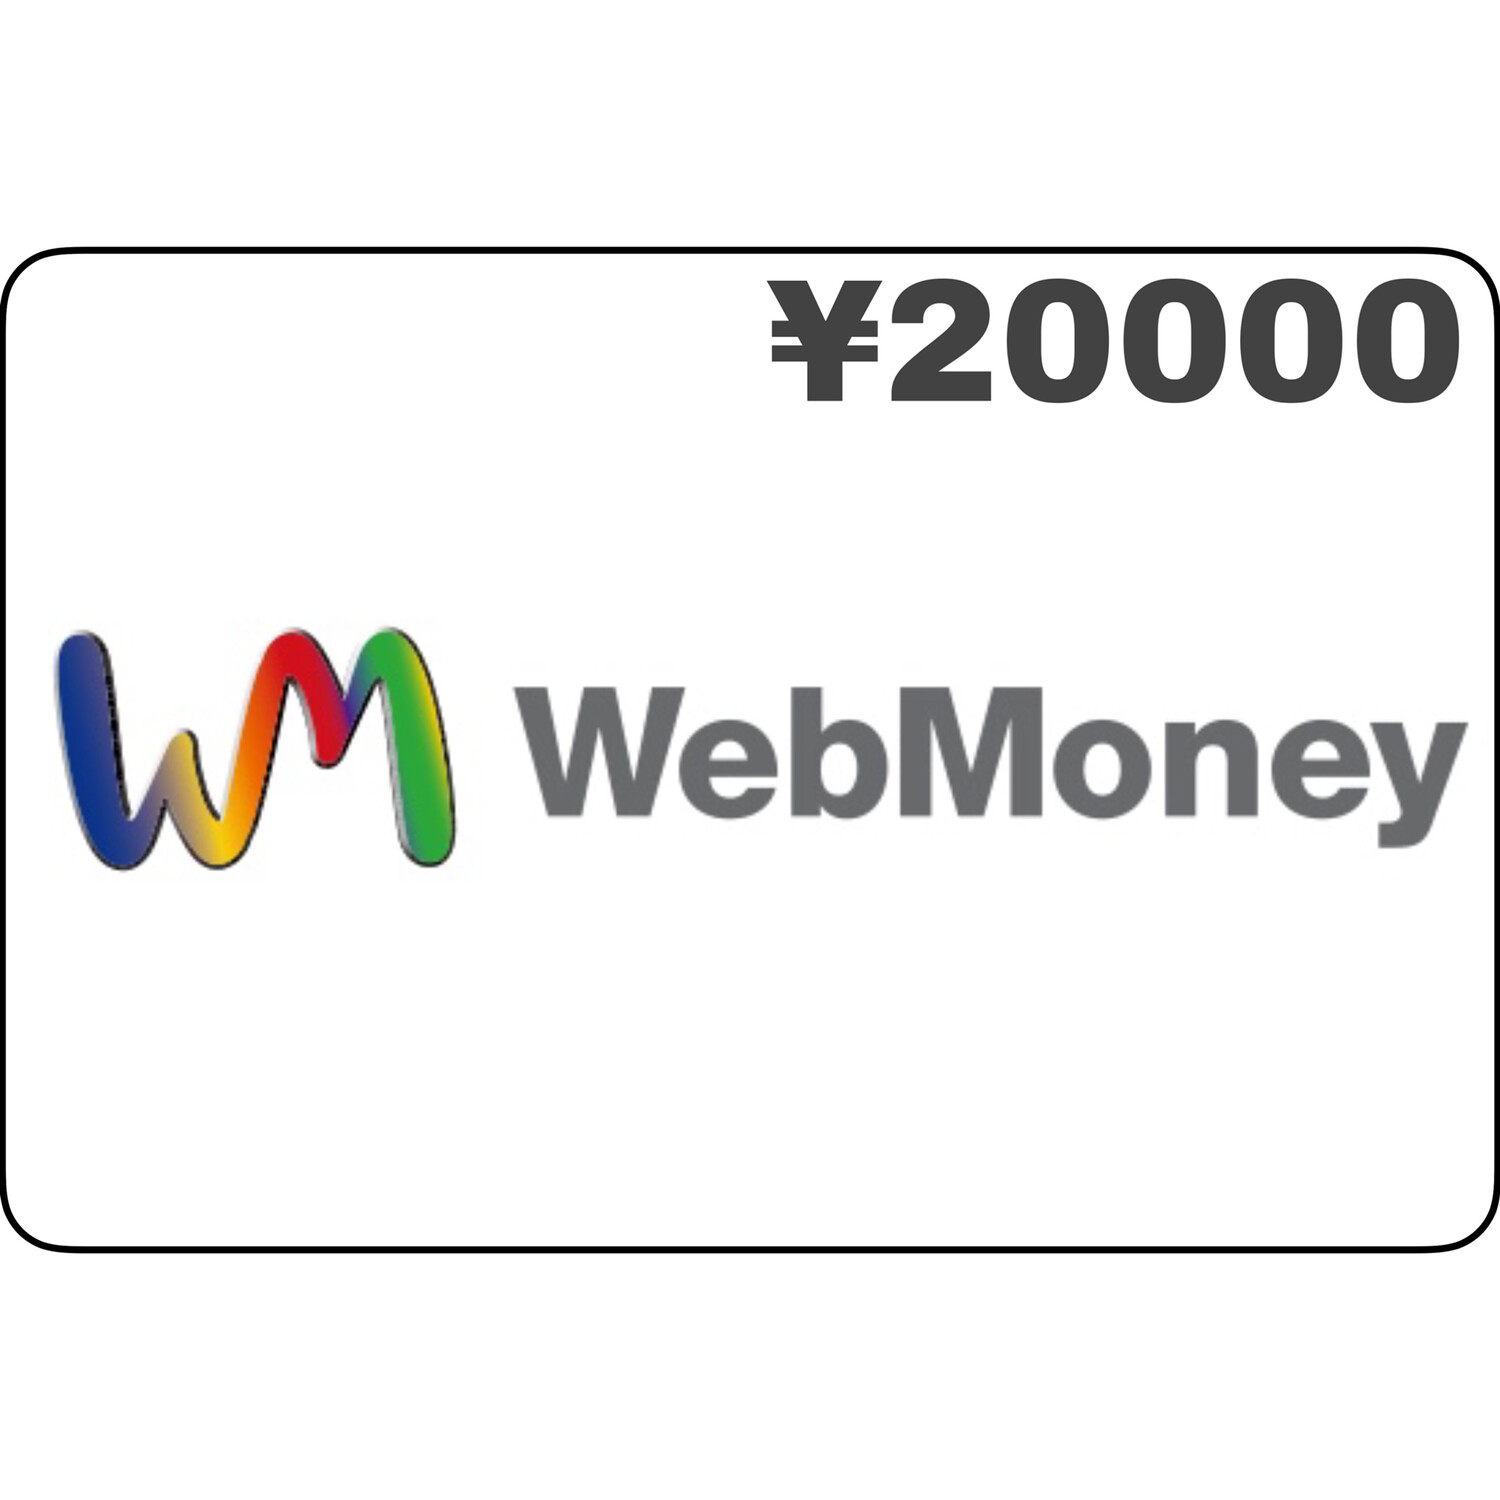 WebMoney Japan ¥20000 Point Code